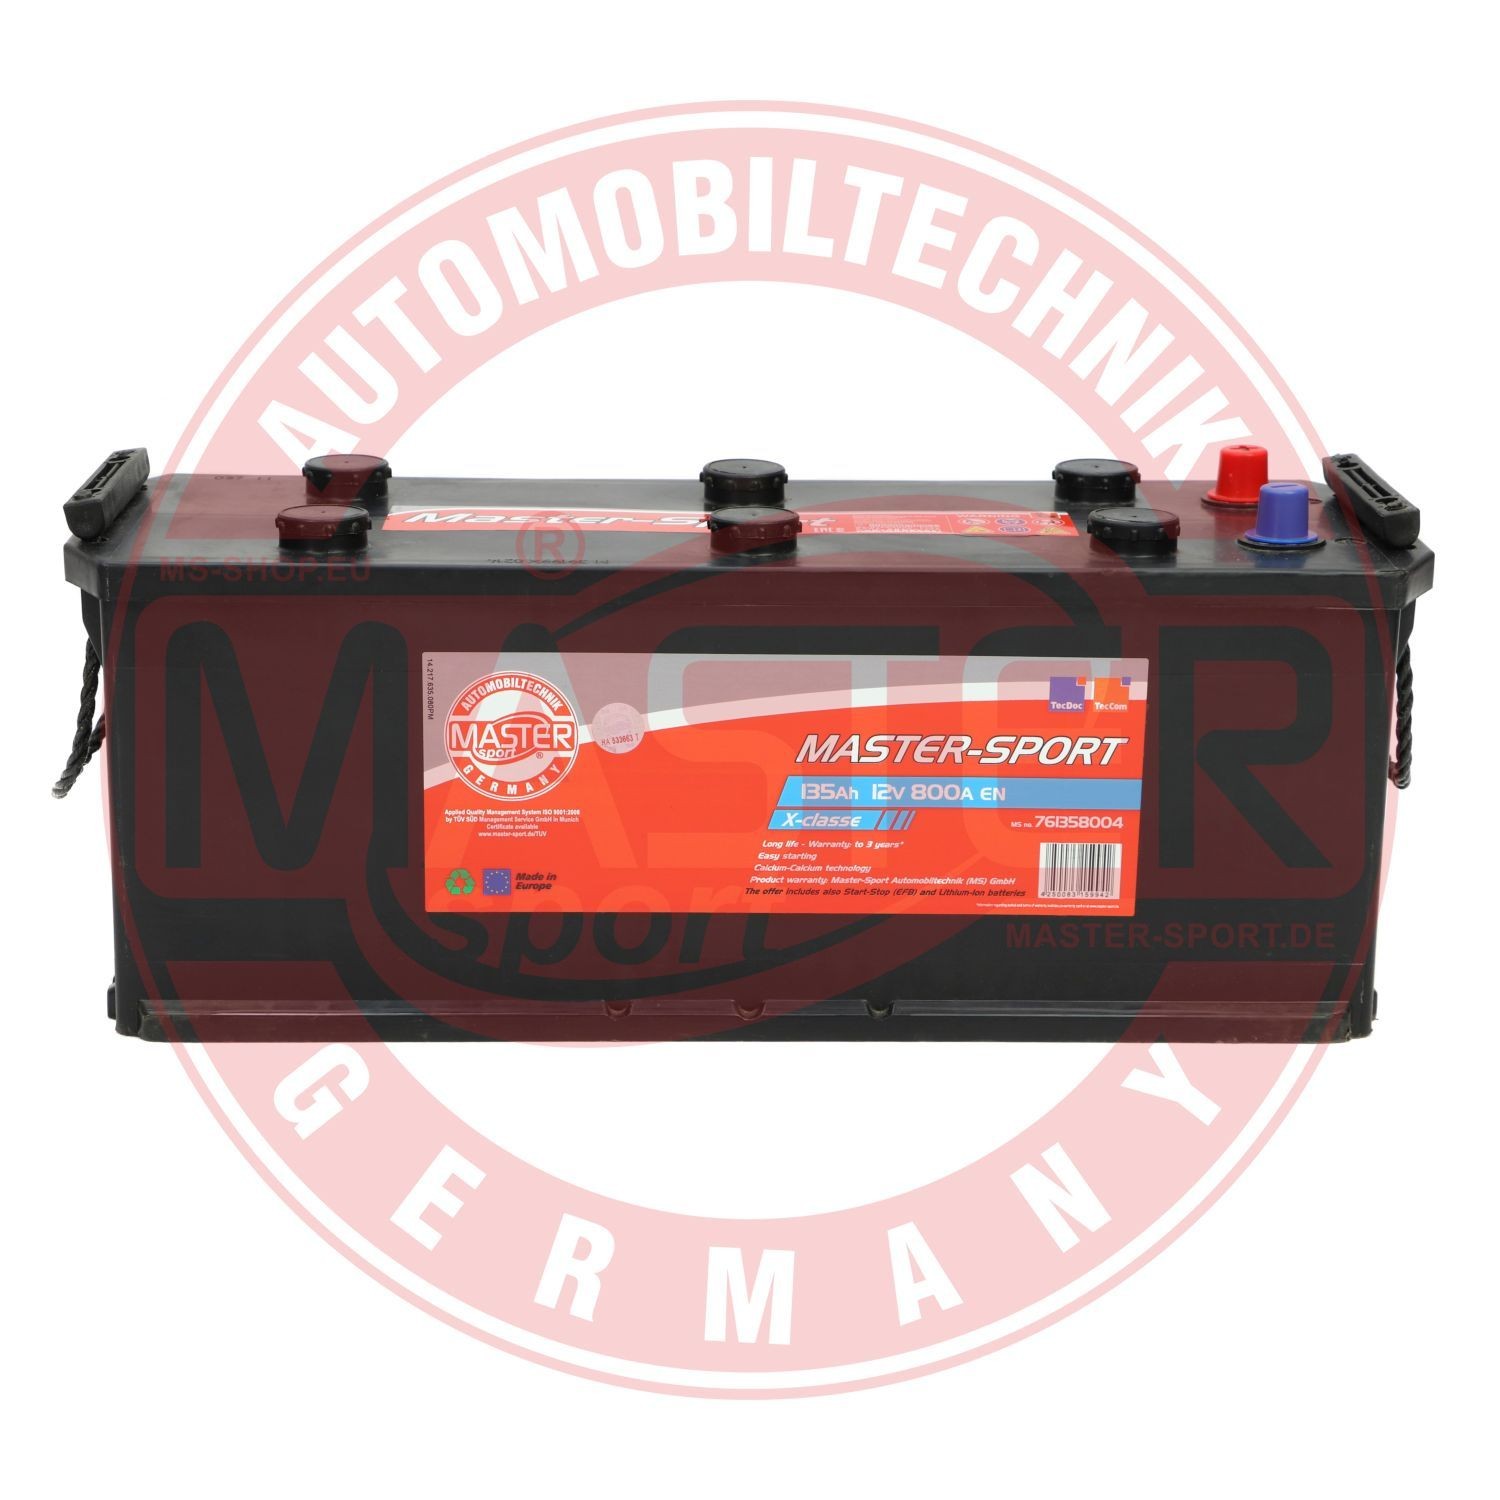 761358004 MASTER-SPORT Batterie IVECO EuroFire